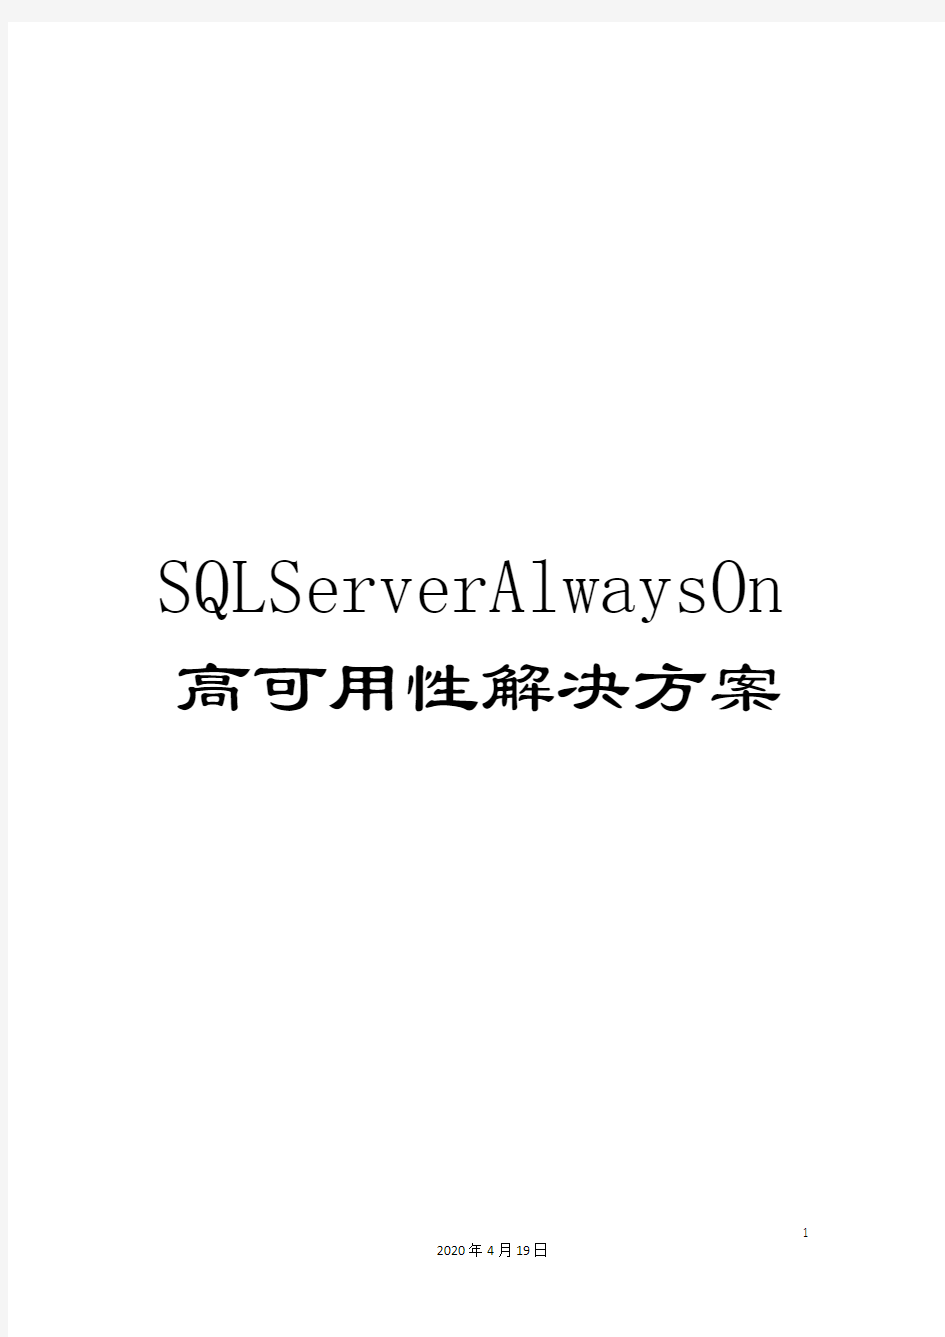 SQLServerAlwaysOn高可用性解决方案